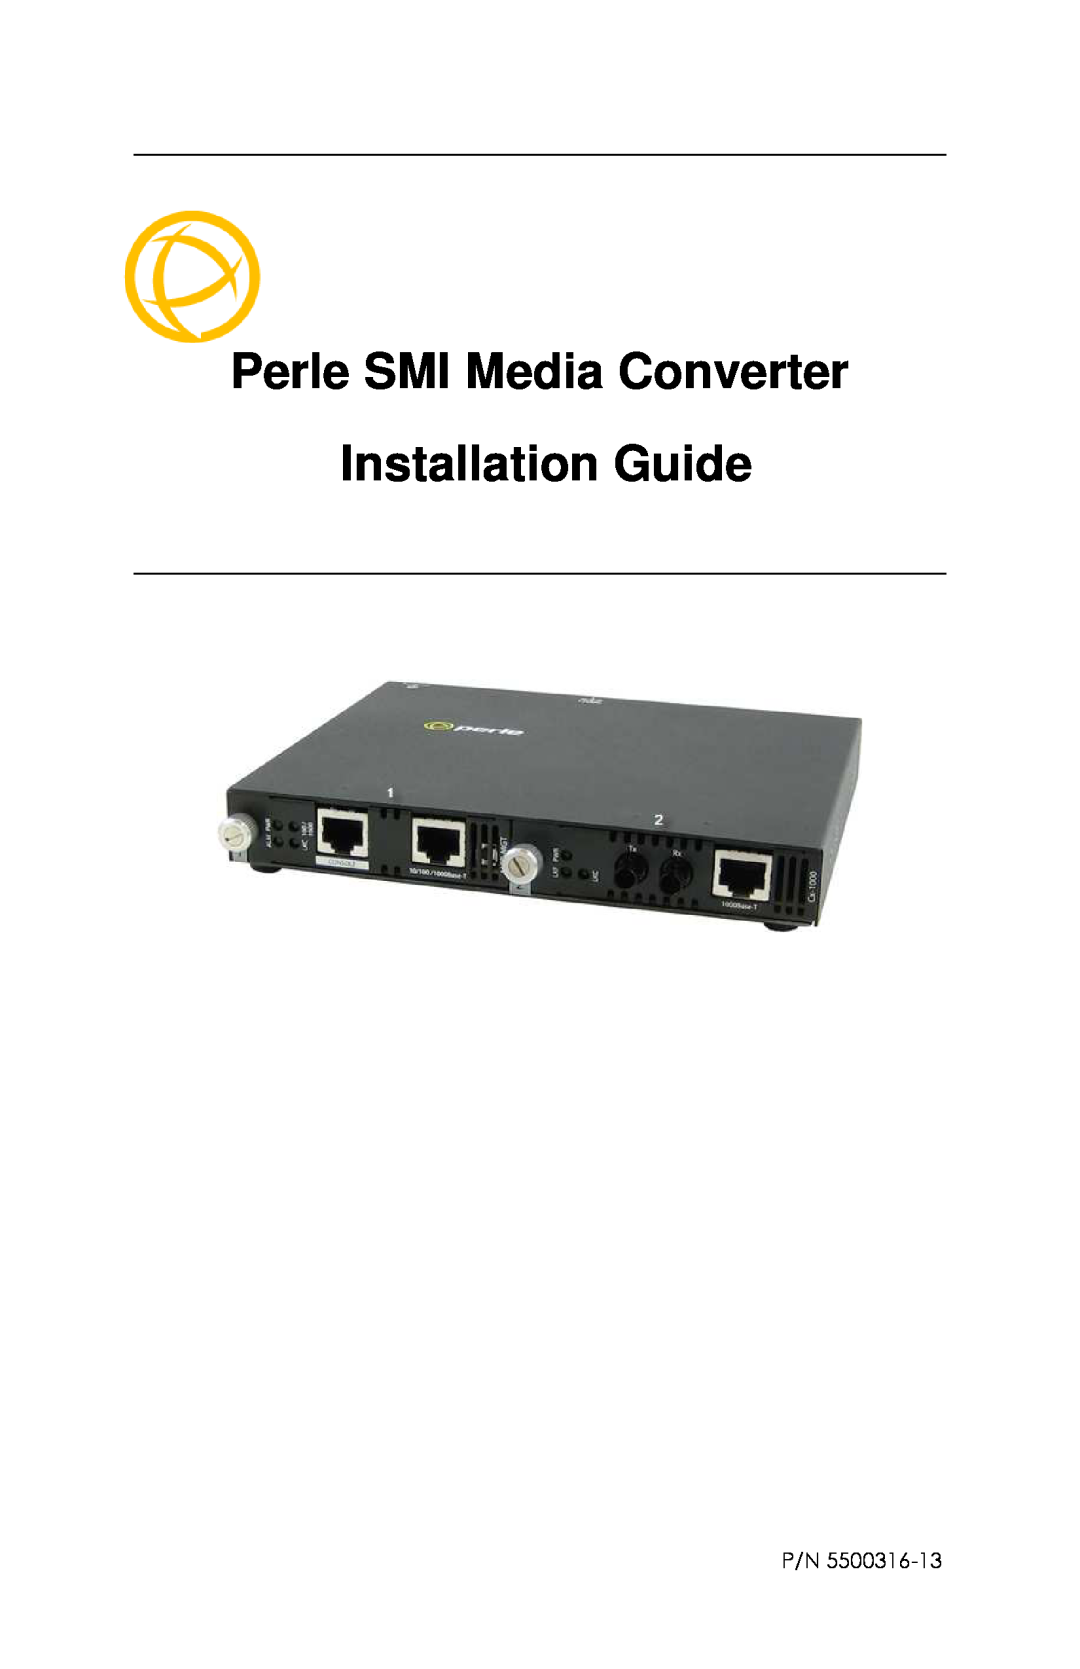 Perle Systems 5500316-13 manual Perle SMI Media Converter Installation Guide 